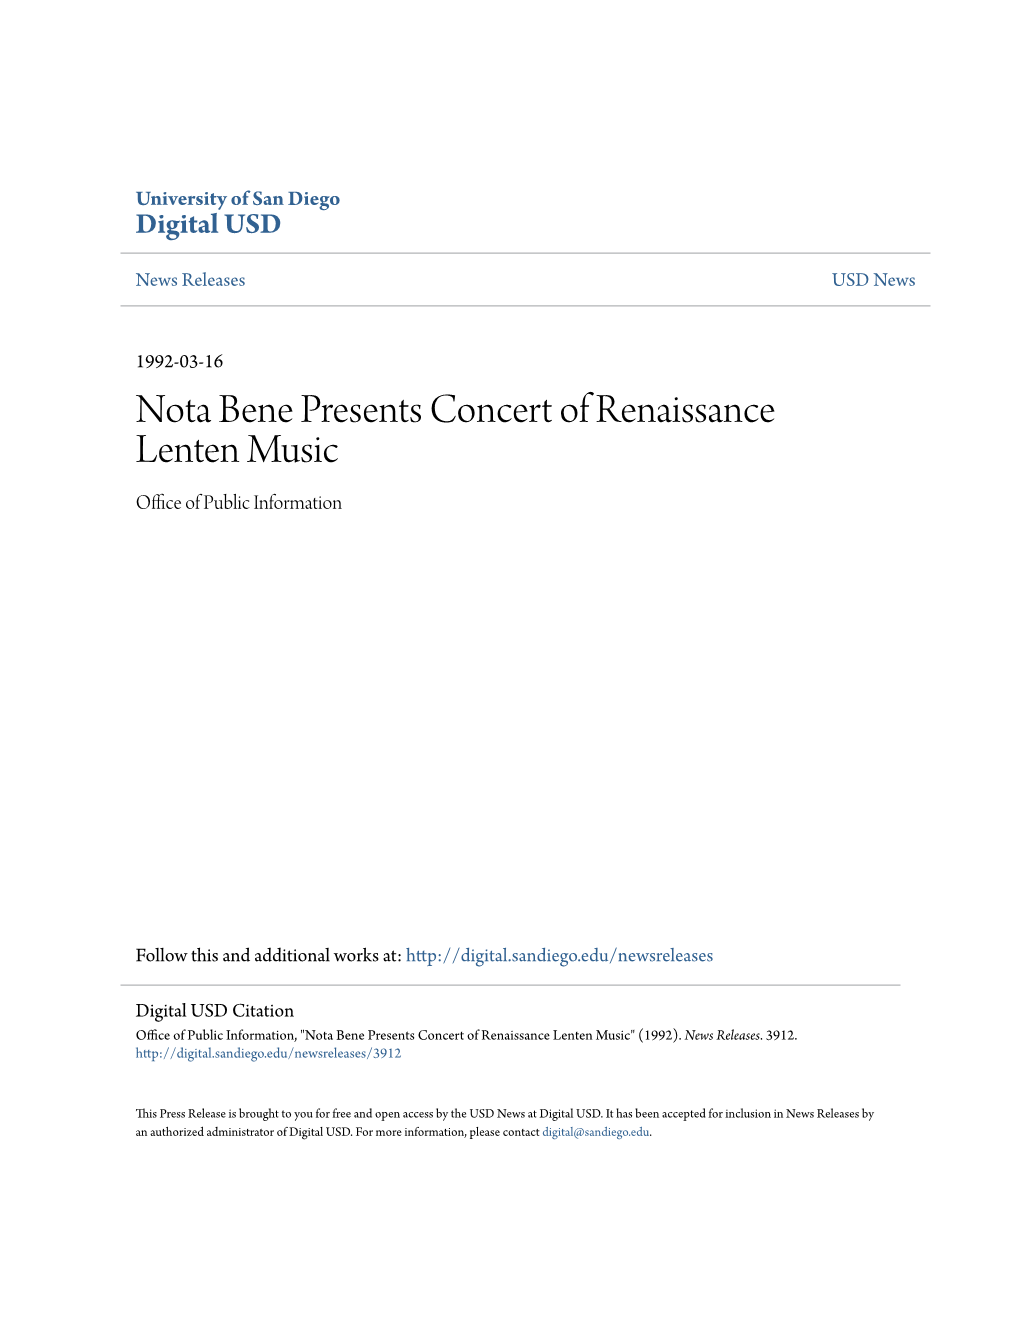 Nota Bene Presents Concert of Renaissance Lenten Music Office of Publicnfor I Mation